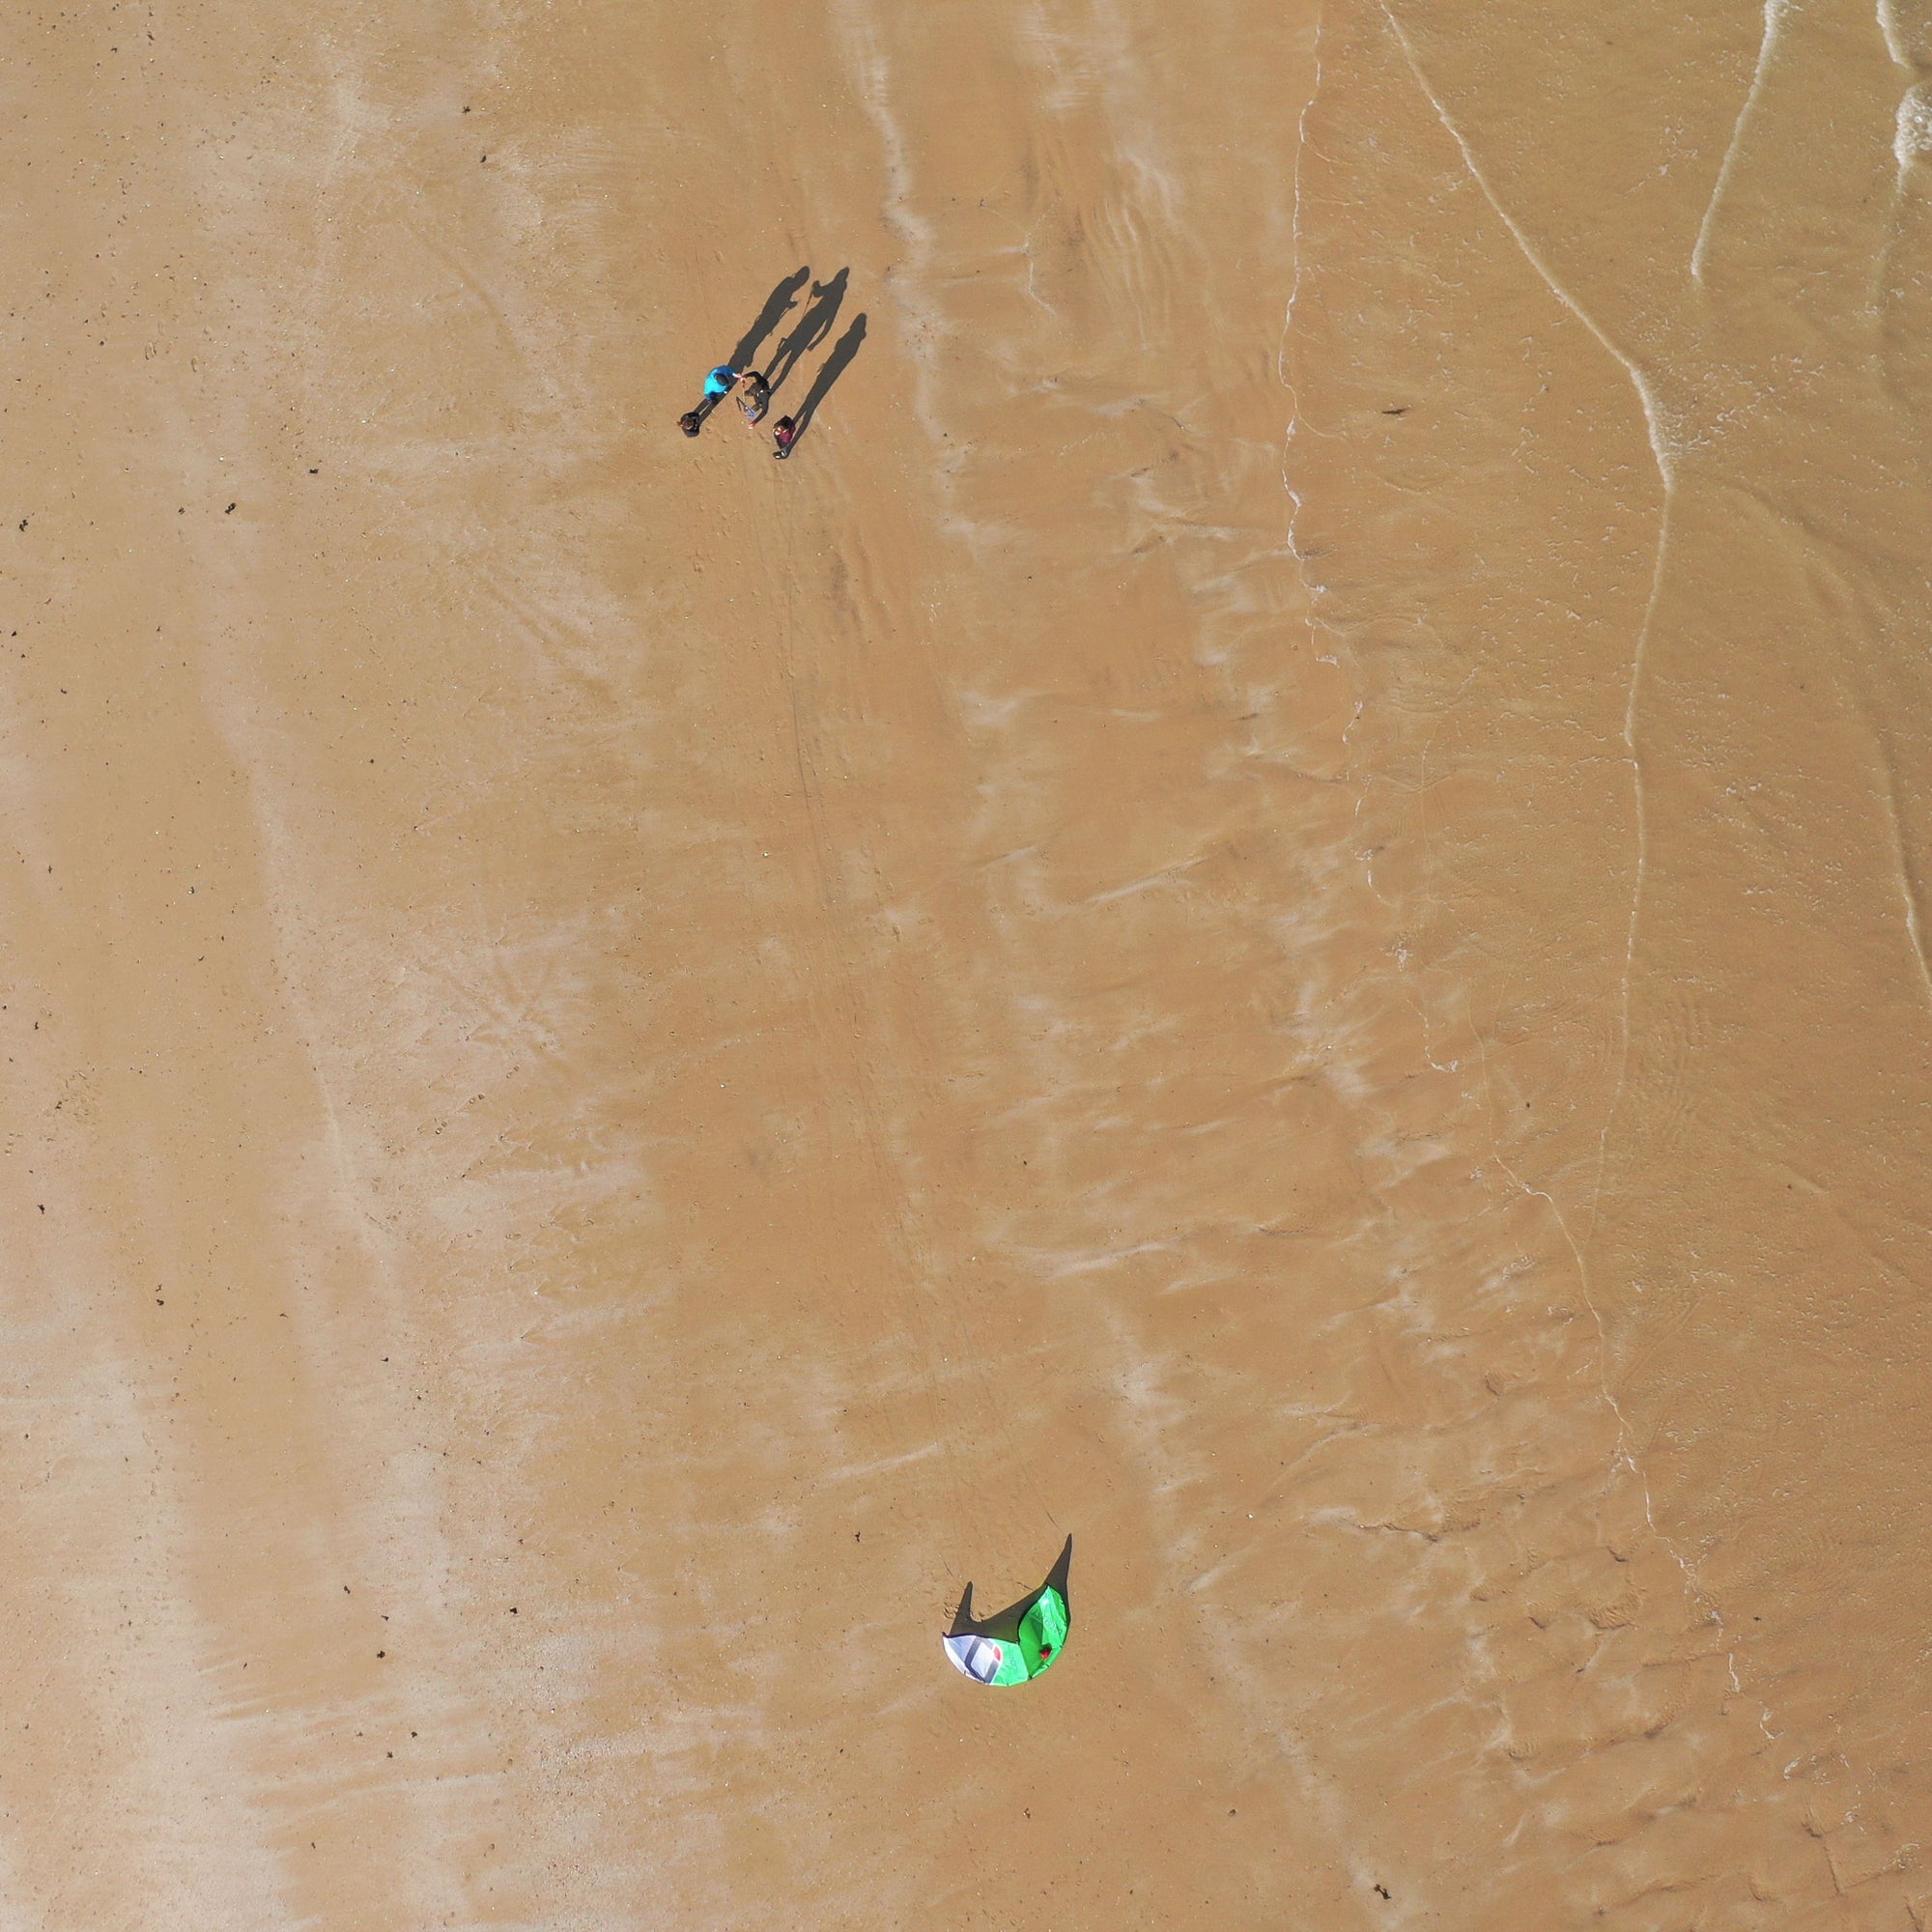 Drones birds eye view of a kitesurfing lesson in progress.